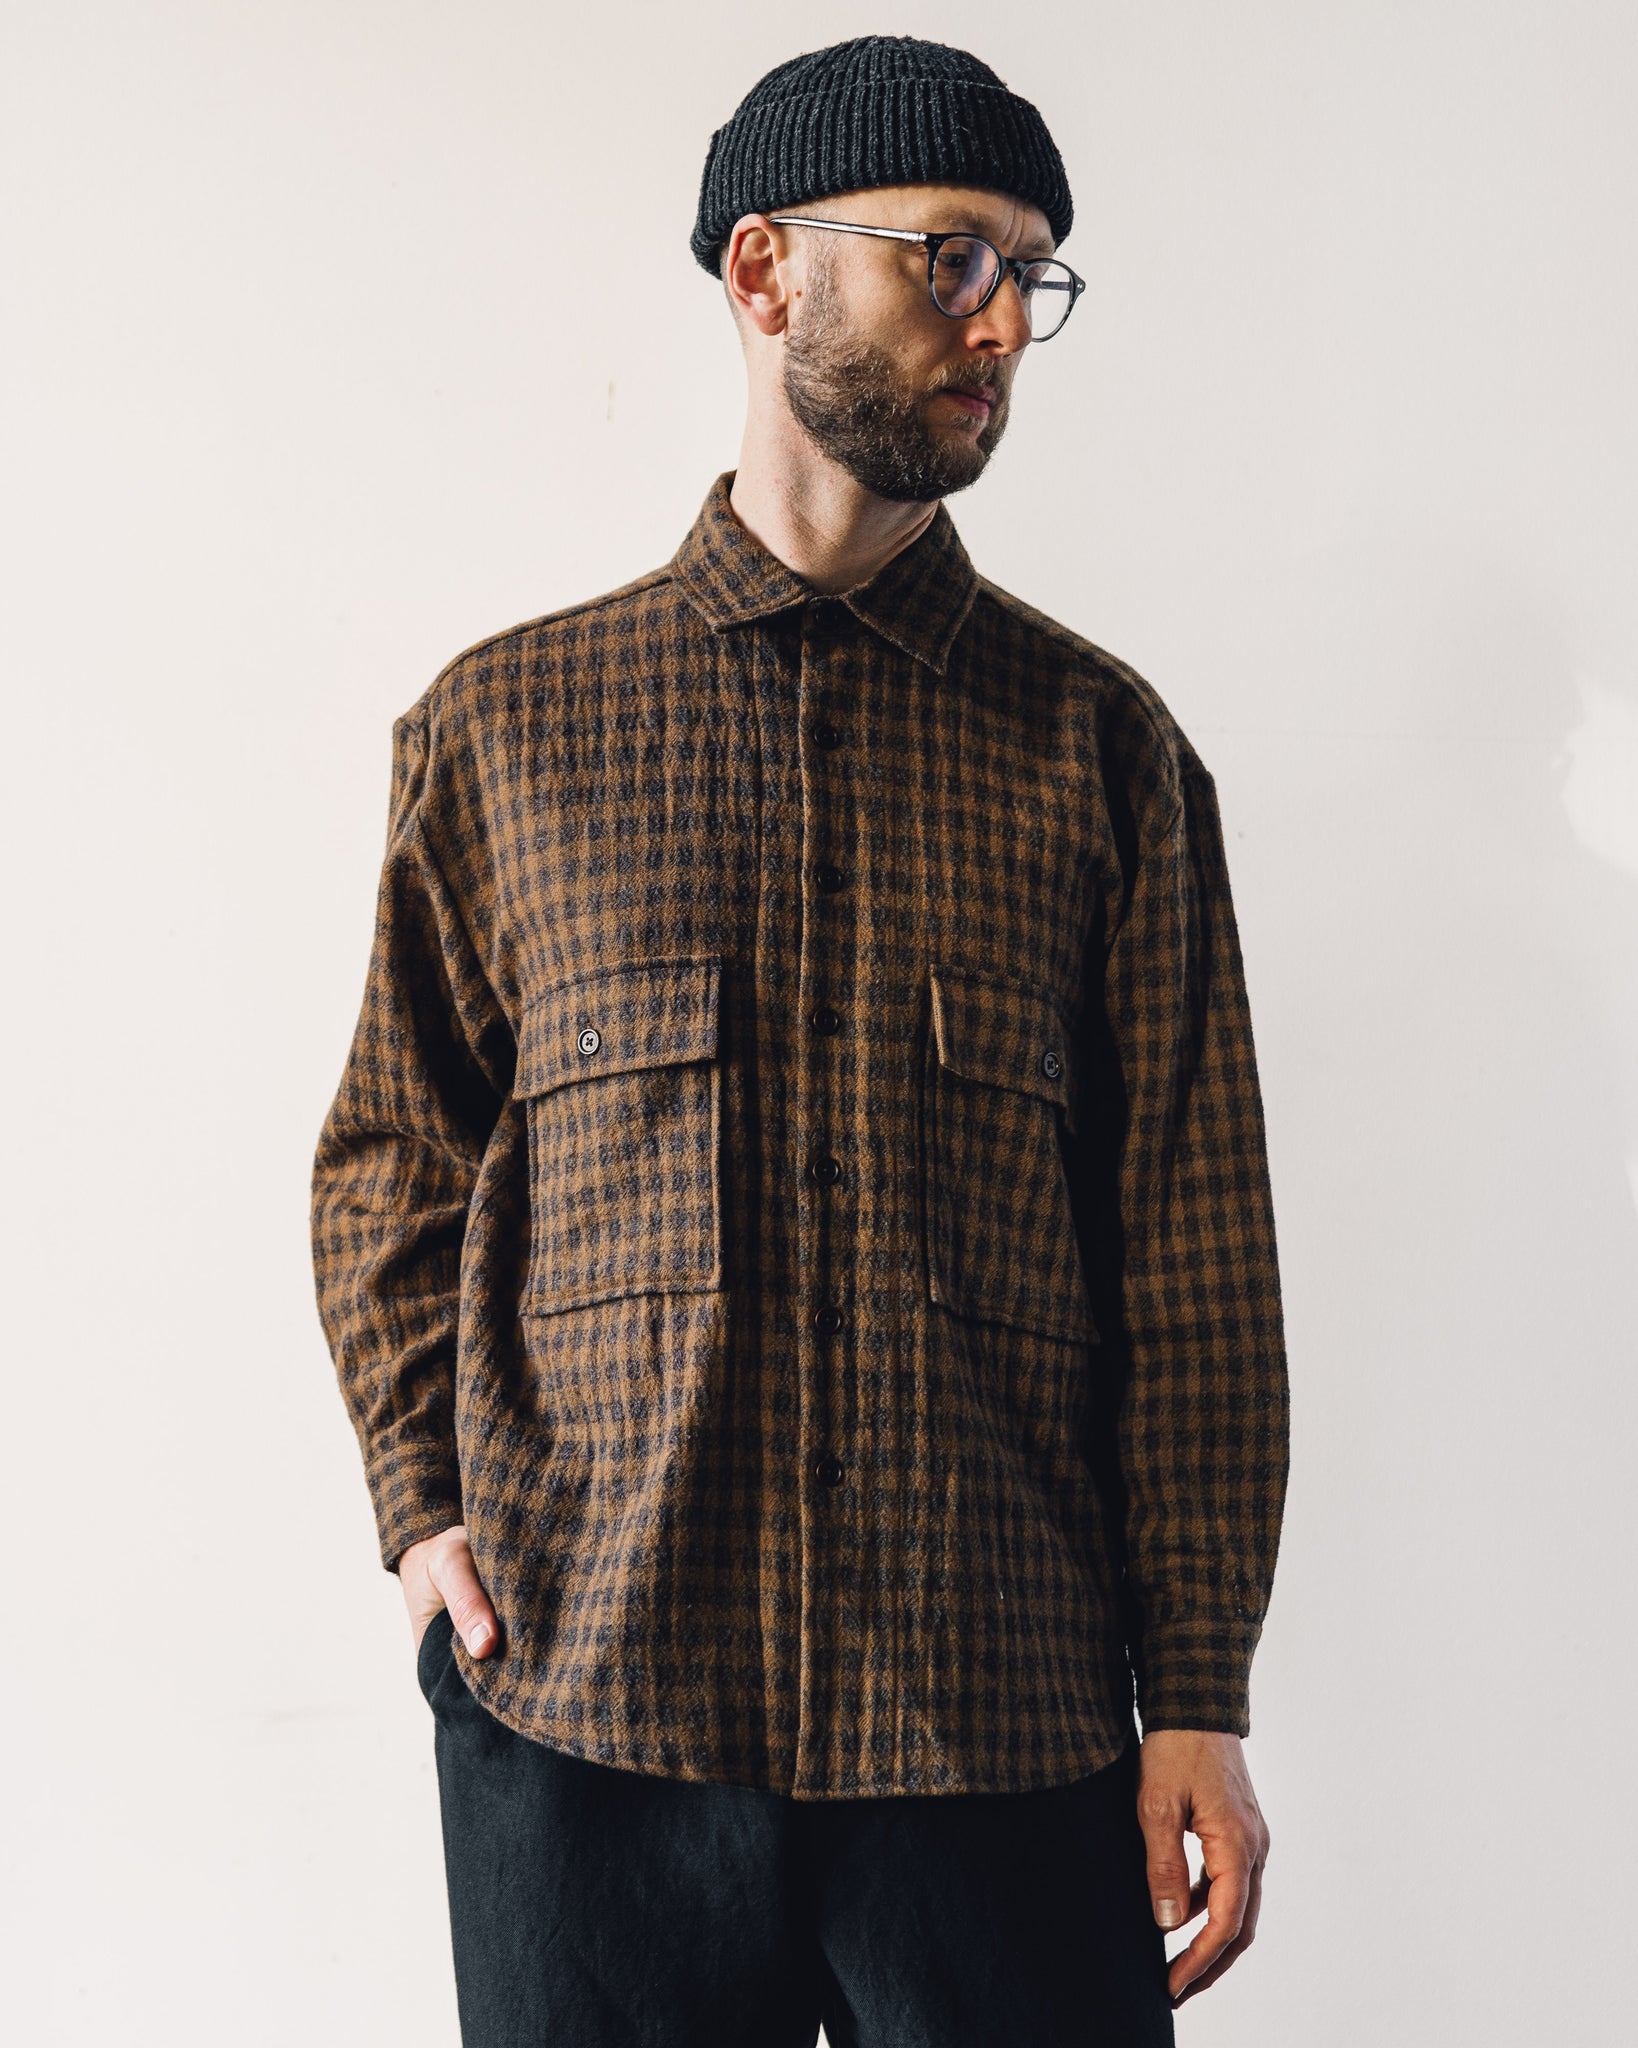 Evan Kinori Big Shirt, Brown/Ochre | Glasswing